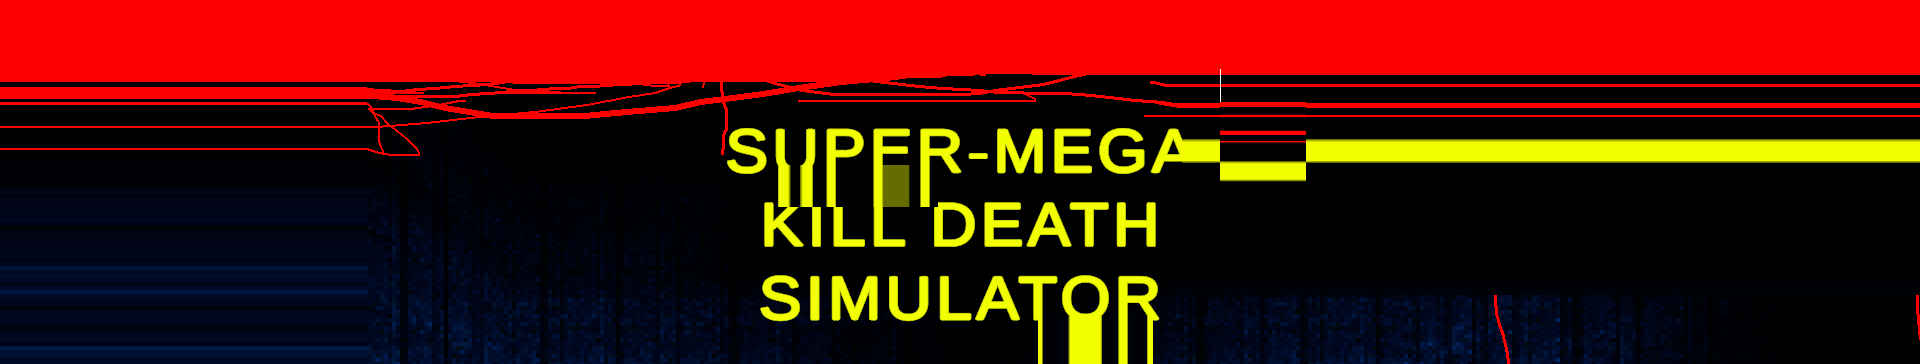 SUPER-MEGA KILL DEATH SIMULATOR